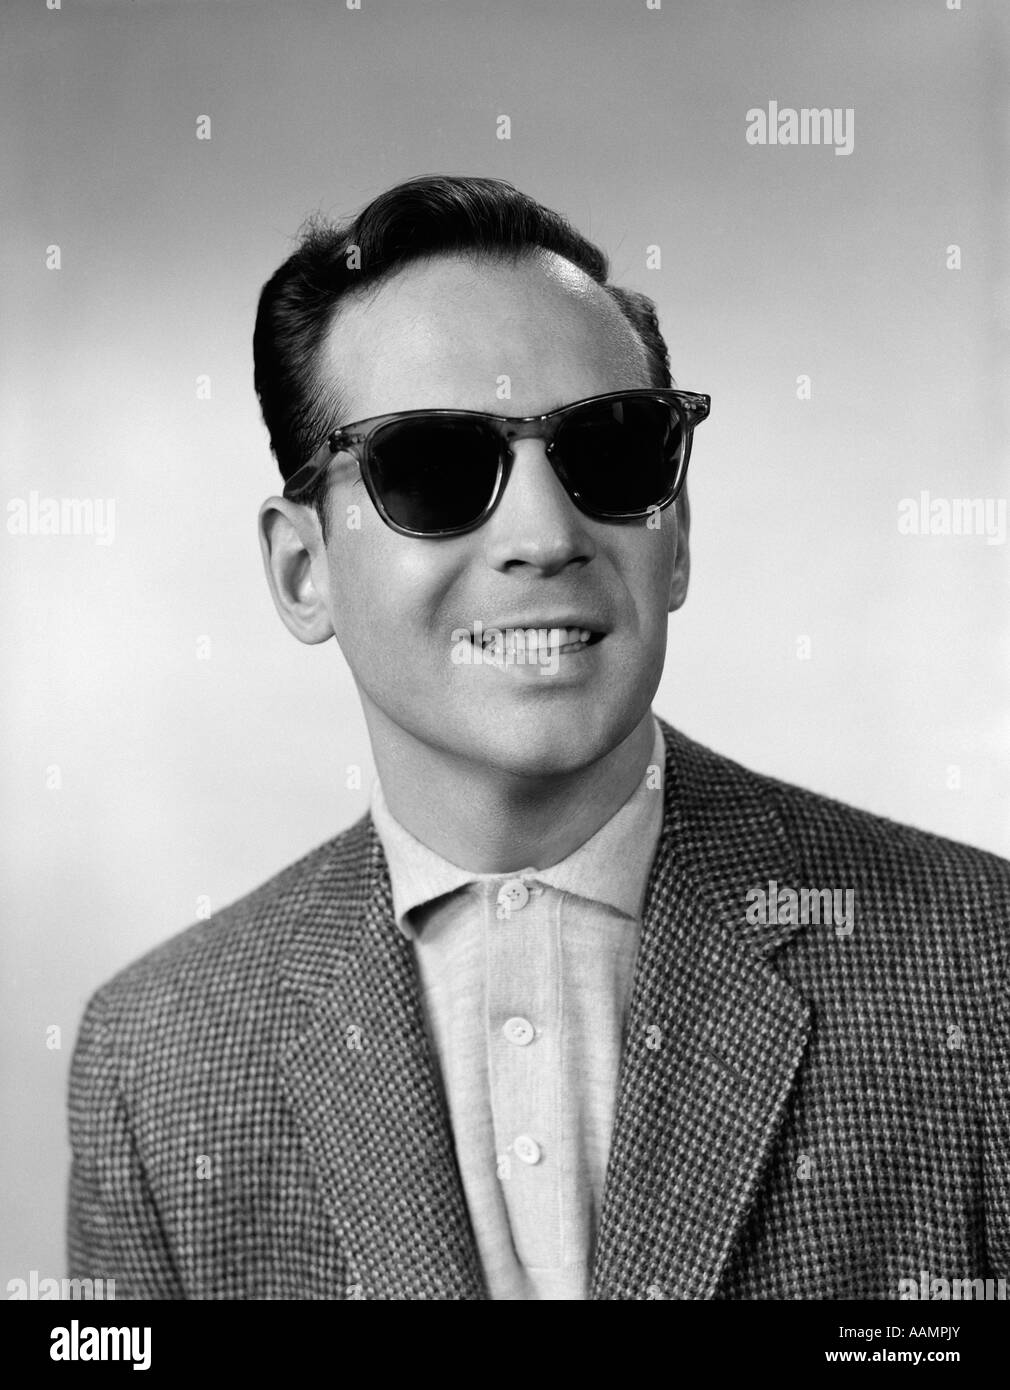 Retro sunglasses man Black and White Stock Photos & Images - Alamy